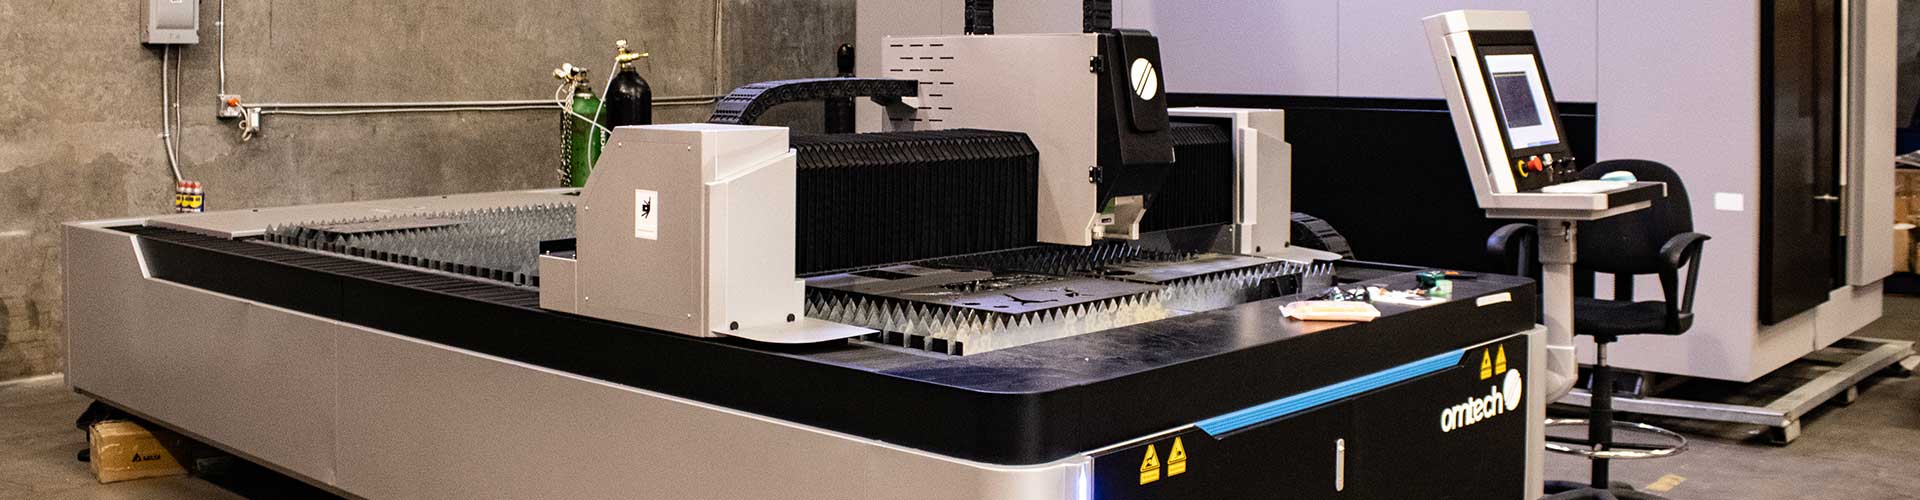 Laser engraving machine, laser cutter, warehouse, omtech cutting machine